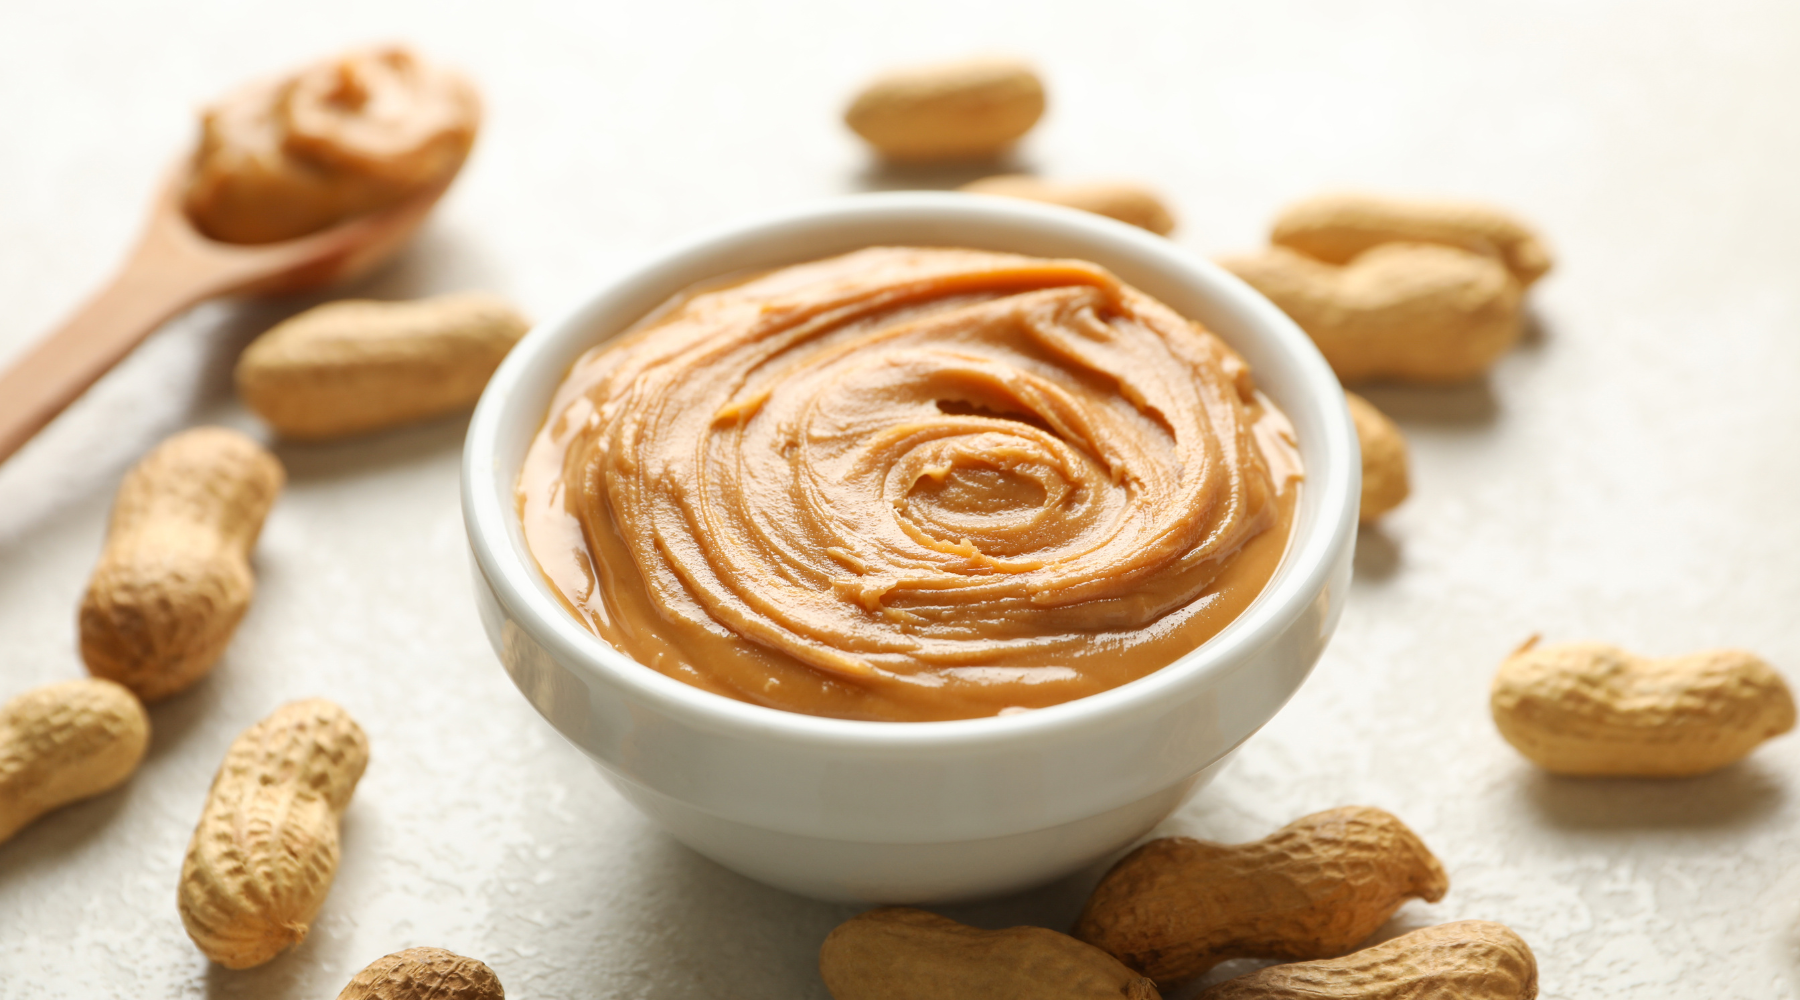 sugar free peanut butter - Alpino Peanut Butter